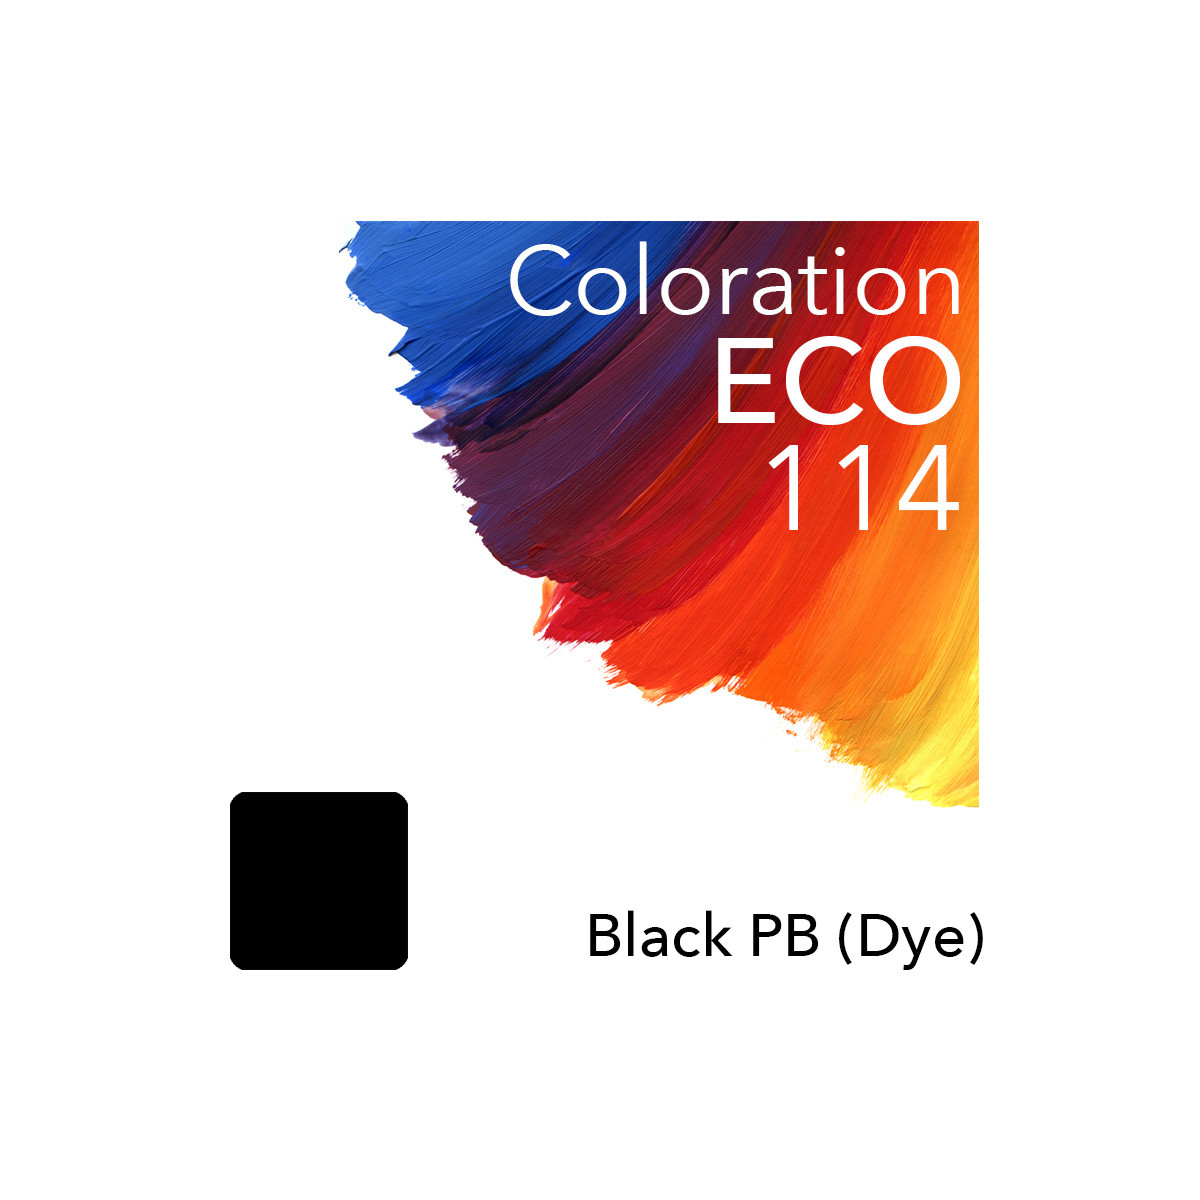 Coloration ECO compatible to Epson 114 PB (Photo-Black)